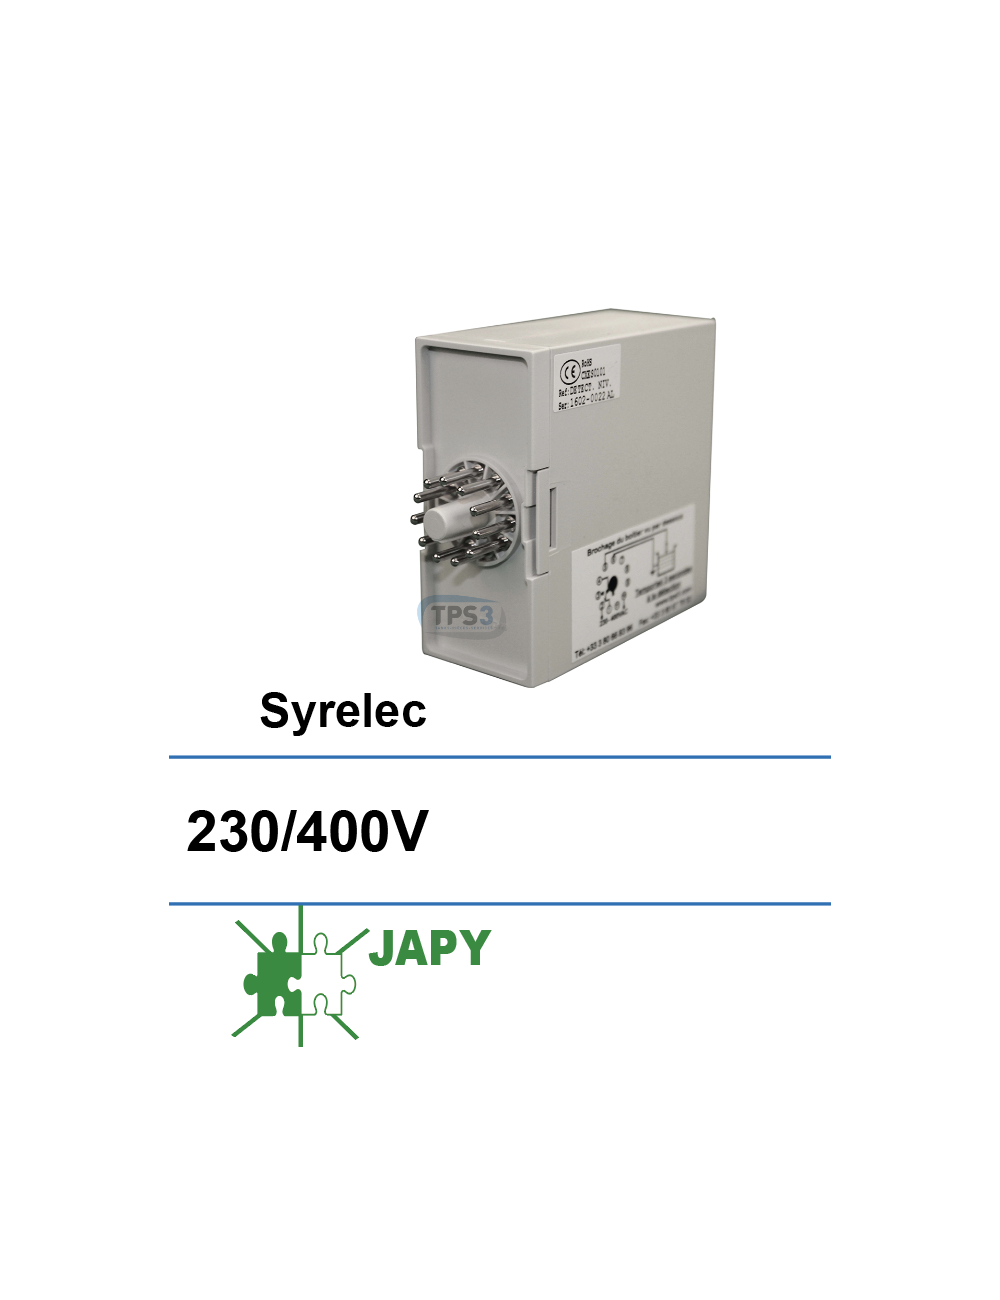 Amplificateur Japy 230/400V adaptable socle Syrelec